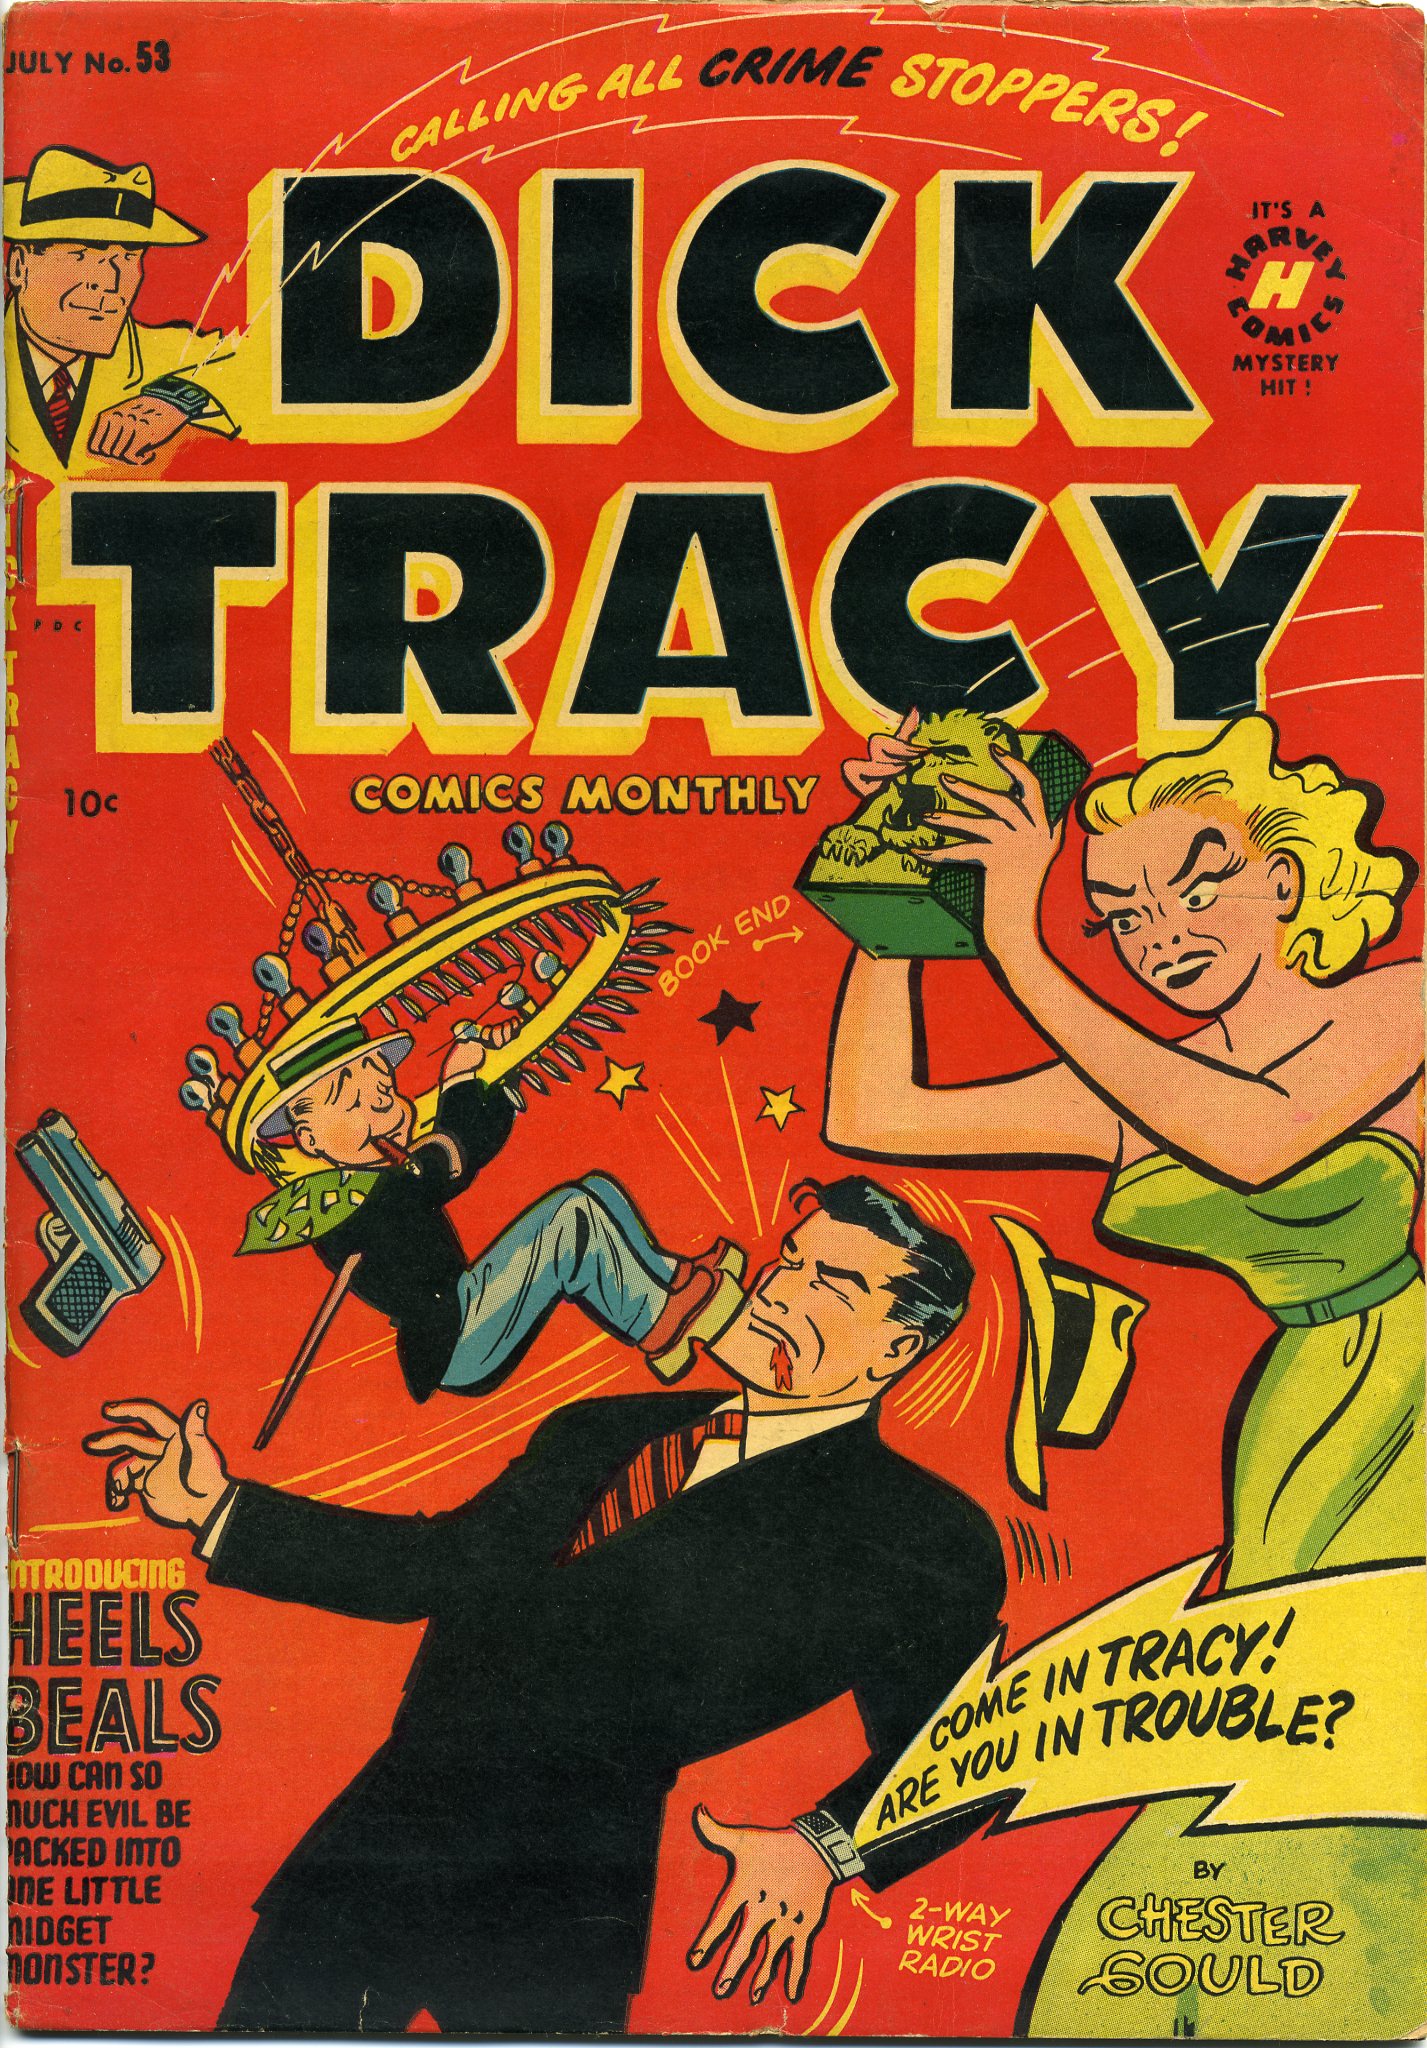 Dick tracy flash gordon